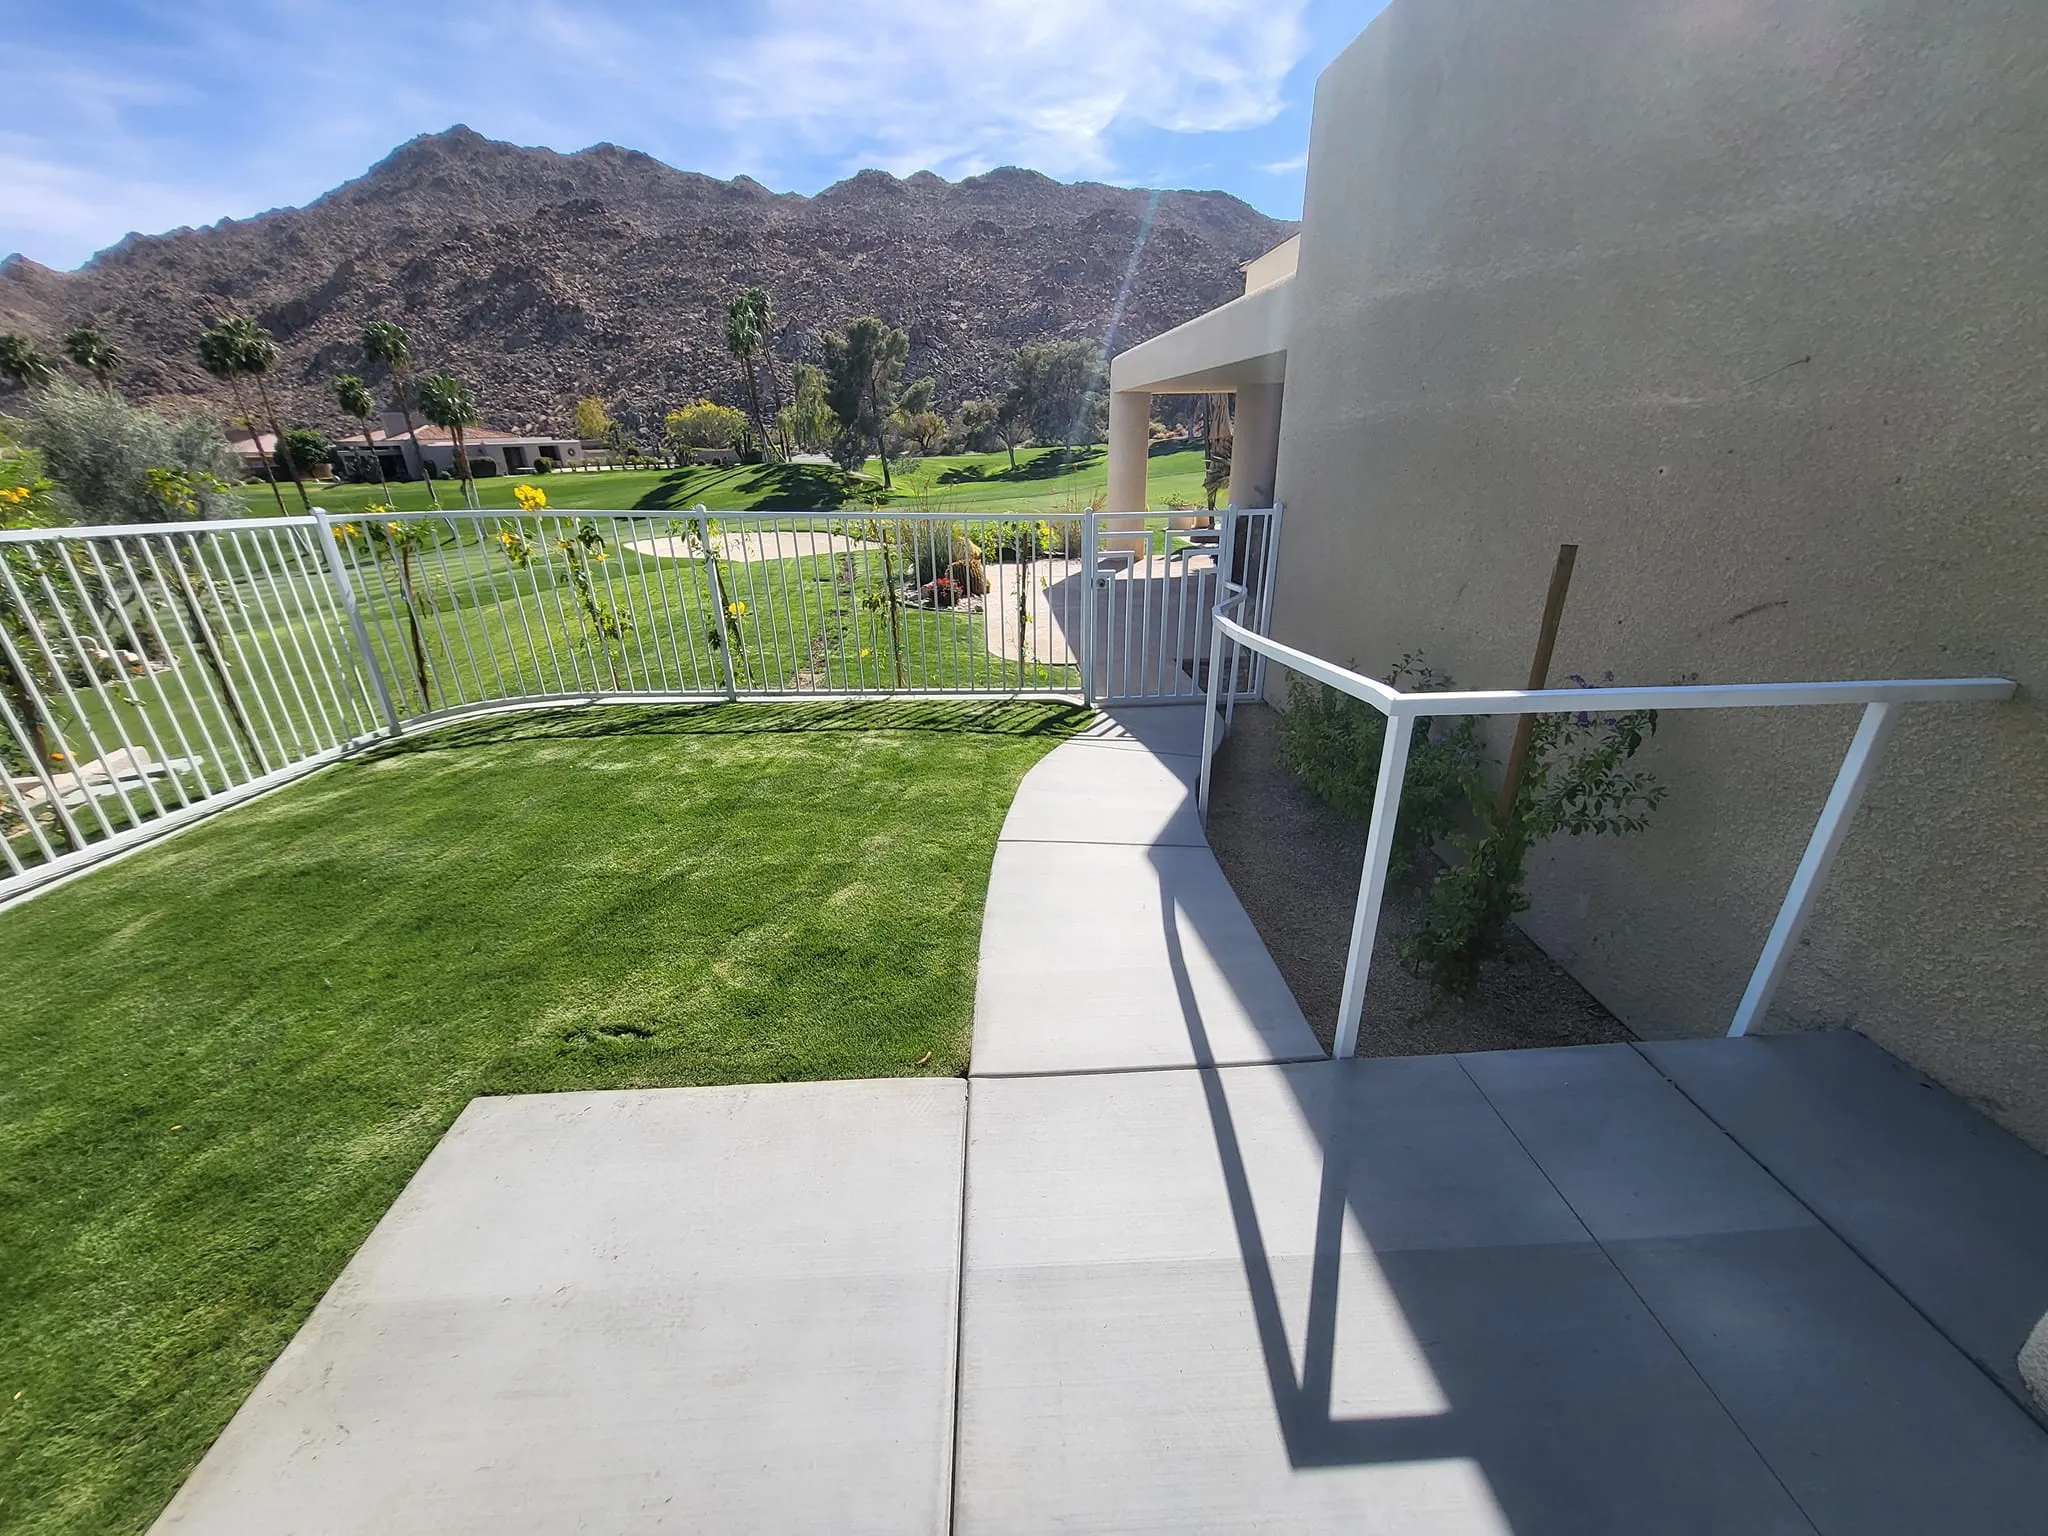 Patio Design & Construction for EG Landscape in Coachella Valley, CA